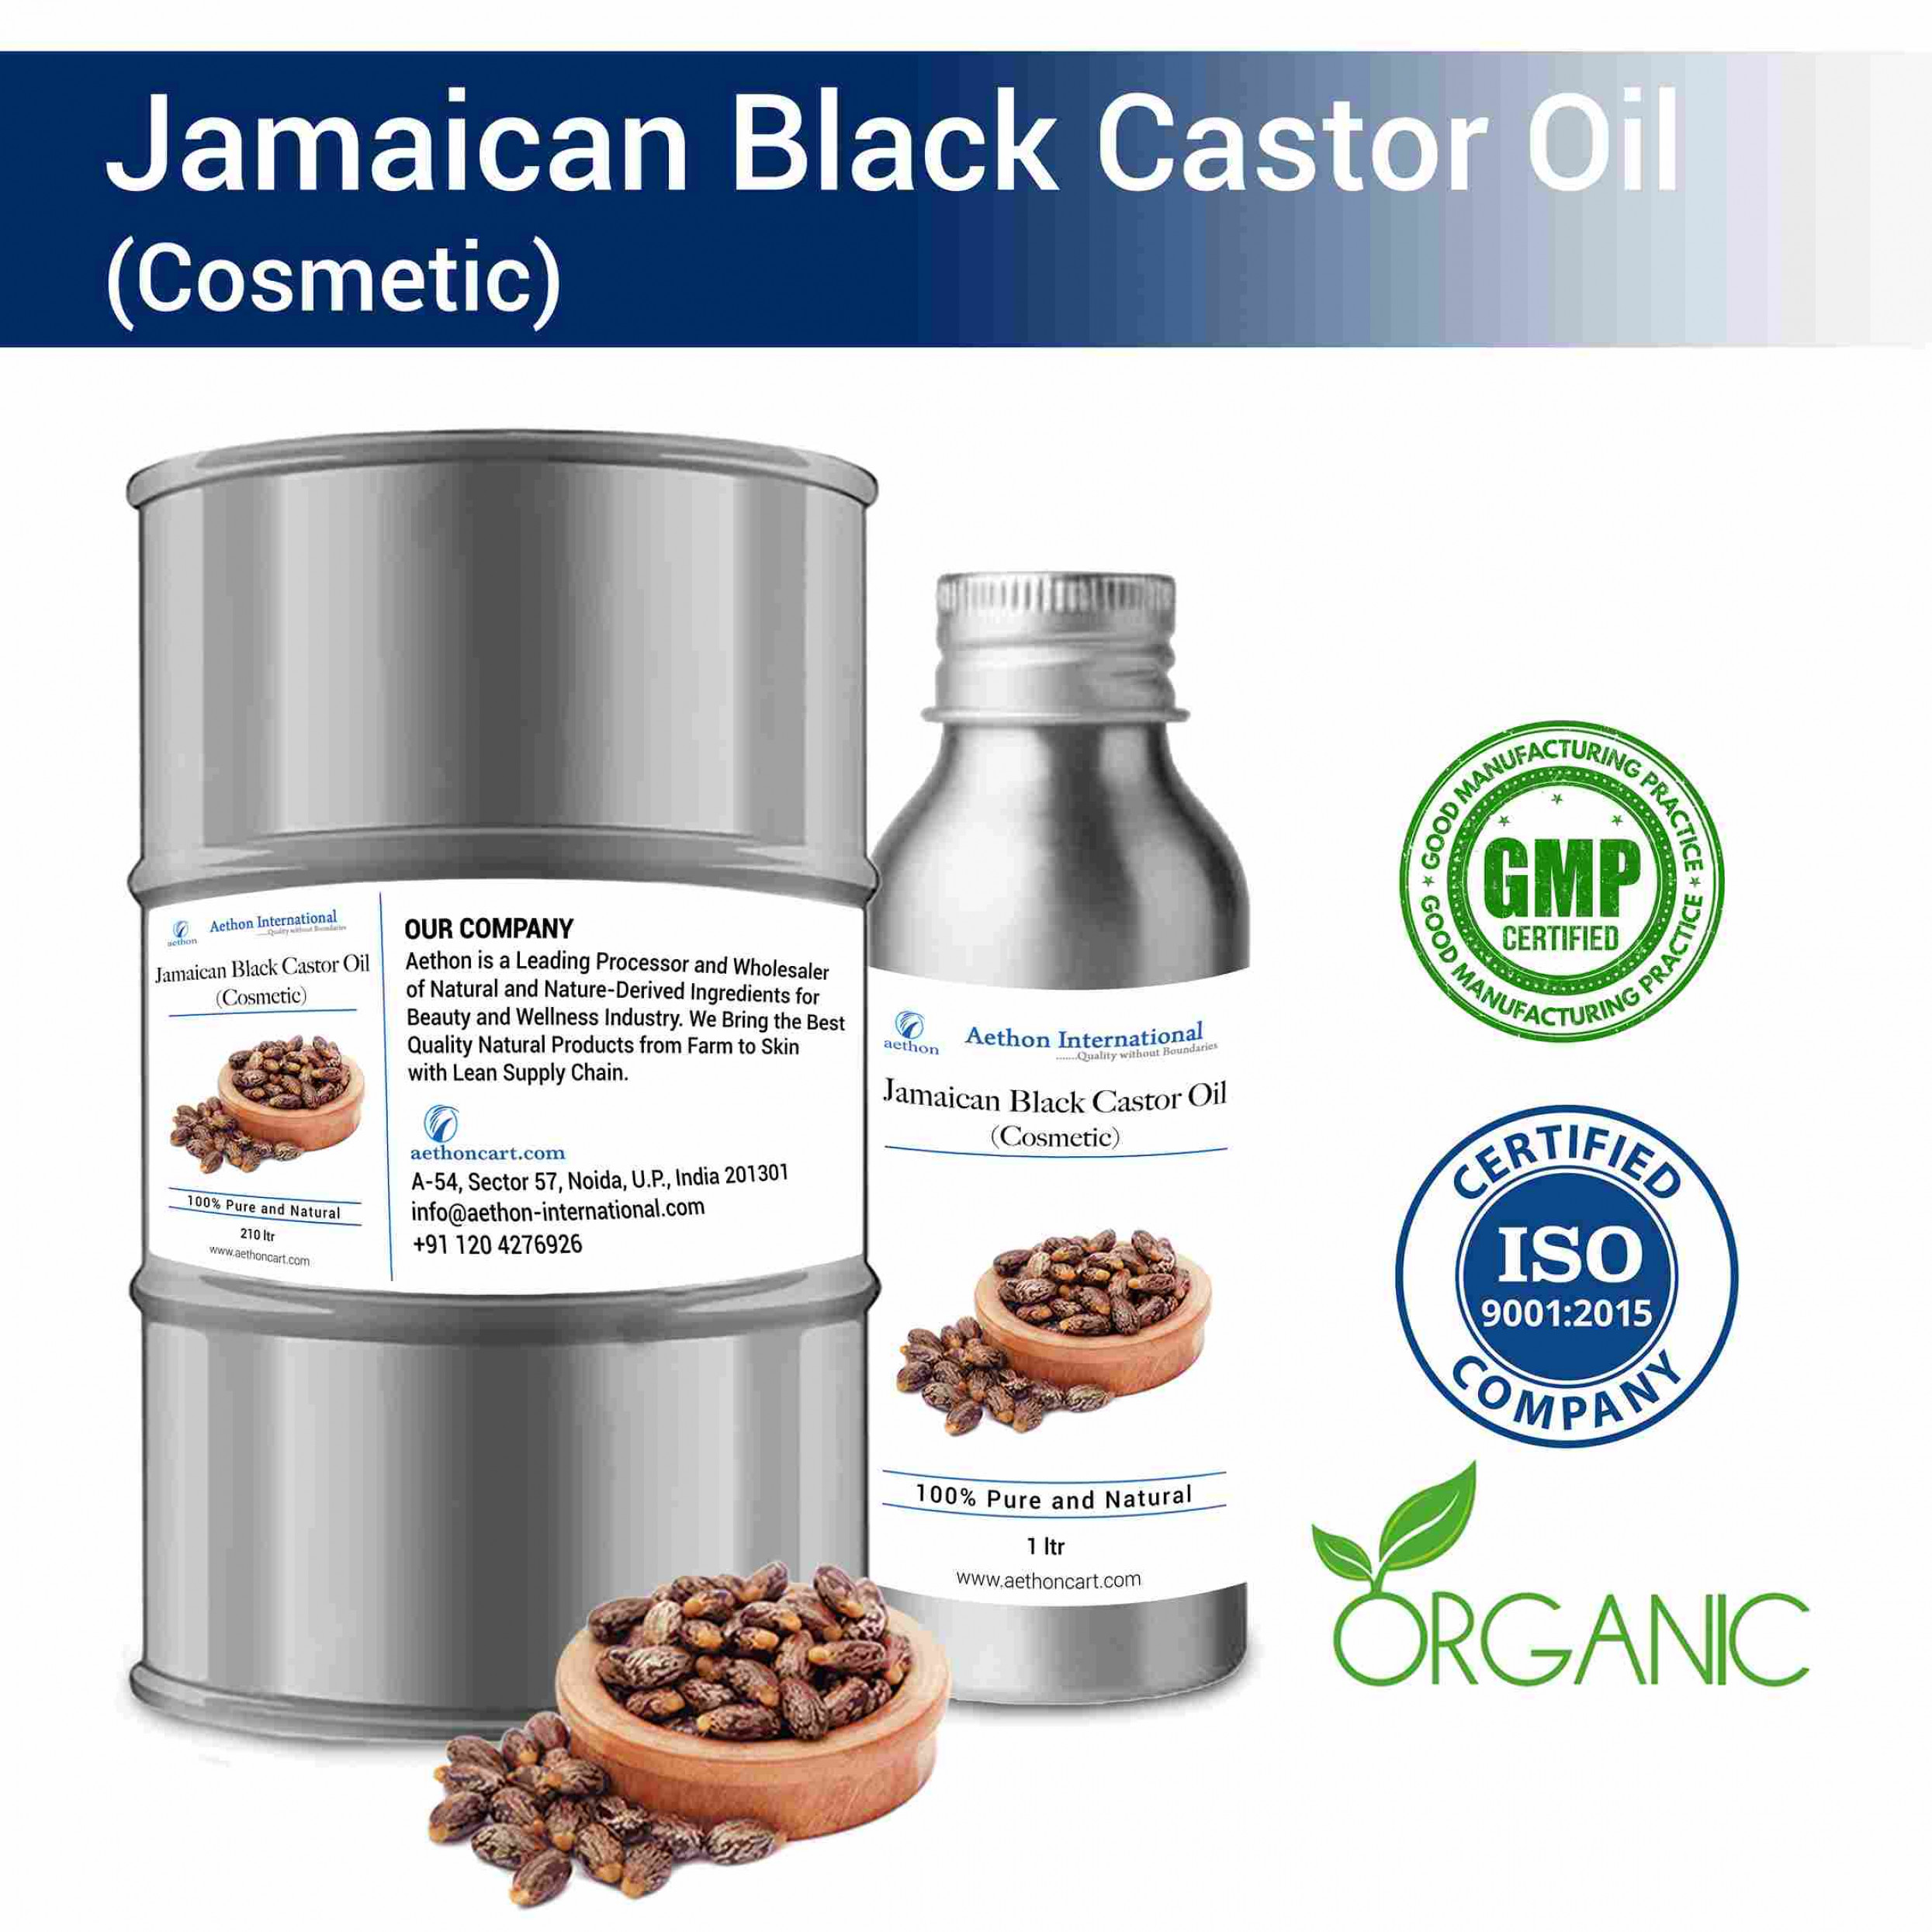 Jamaican Black Castor Oil (Cosmetic)